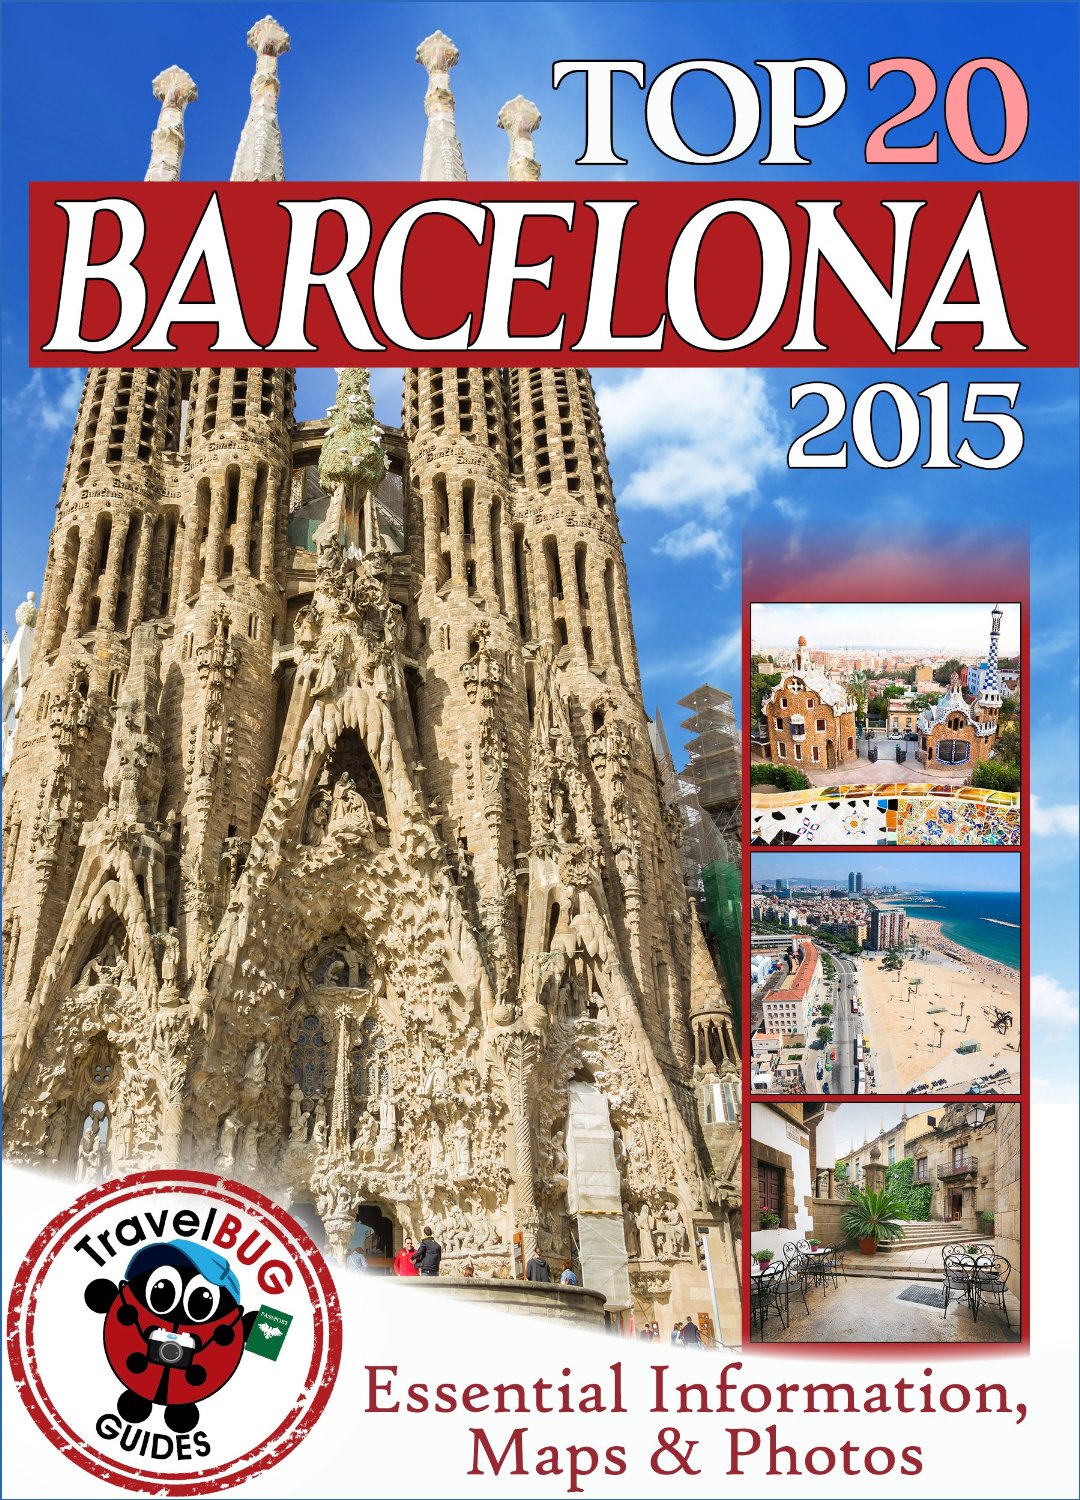 Barcelona Travel Guide 2015: Essential Tourist Information, Maps & Photos